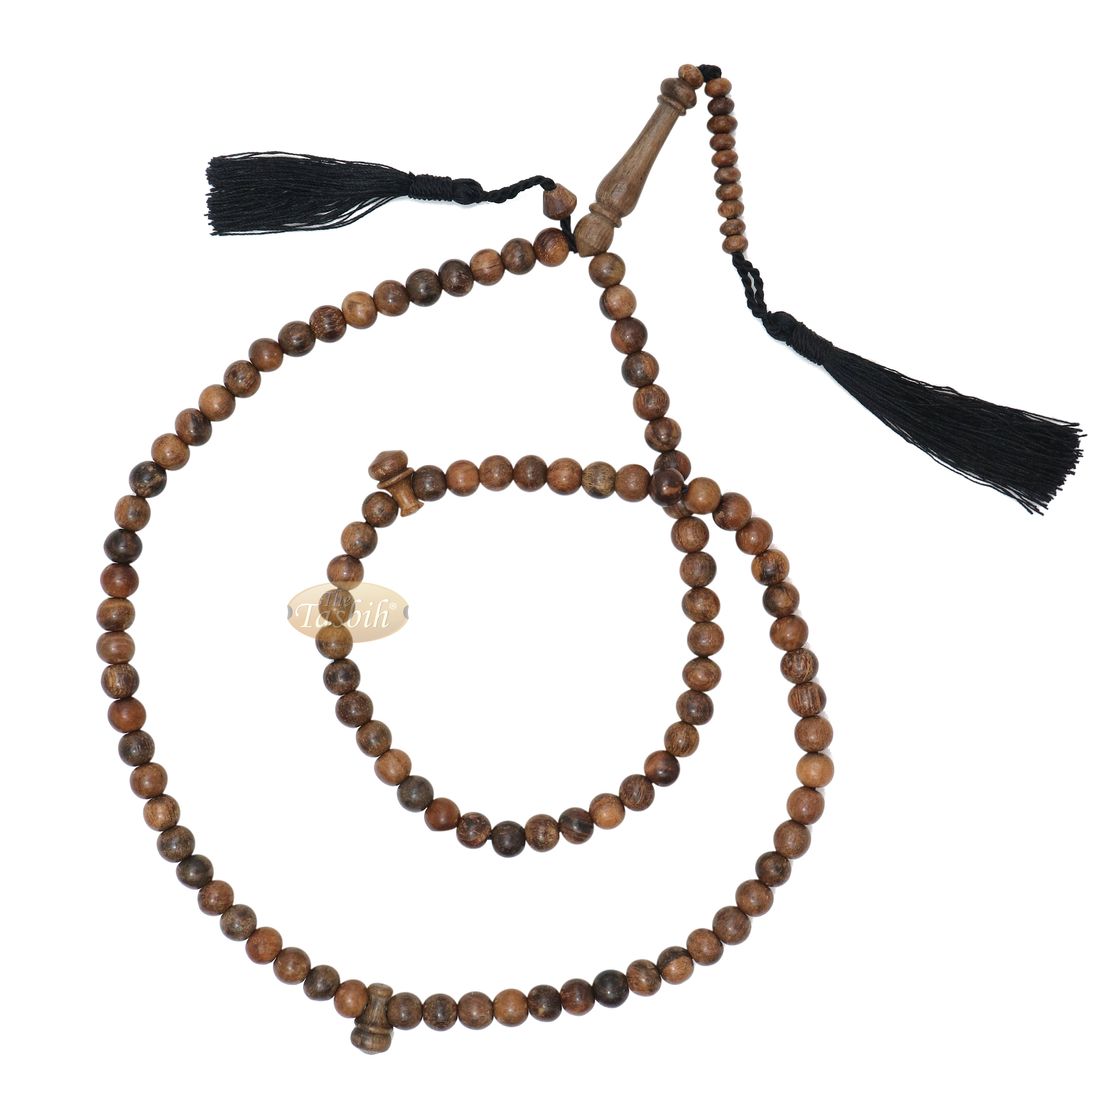 Scented Oud Light Brown Tasbih 9mm HandMade Misbaha Prayer Beads Subha with Plain Black Tassels